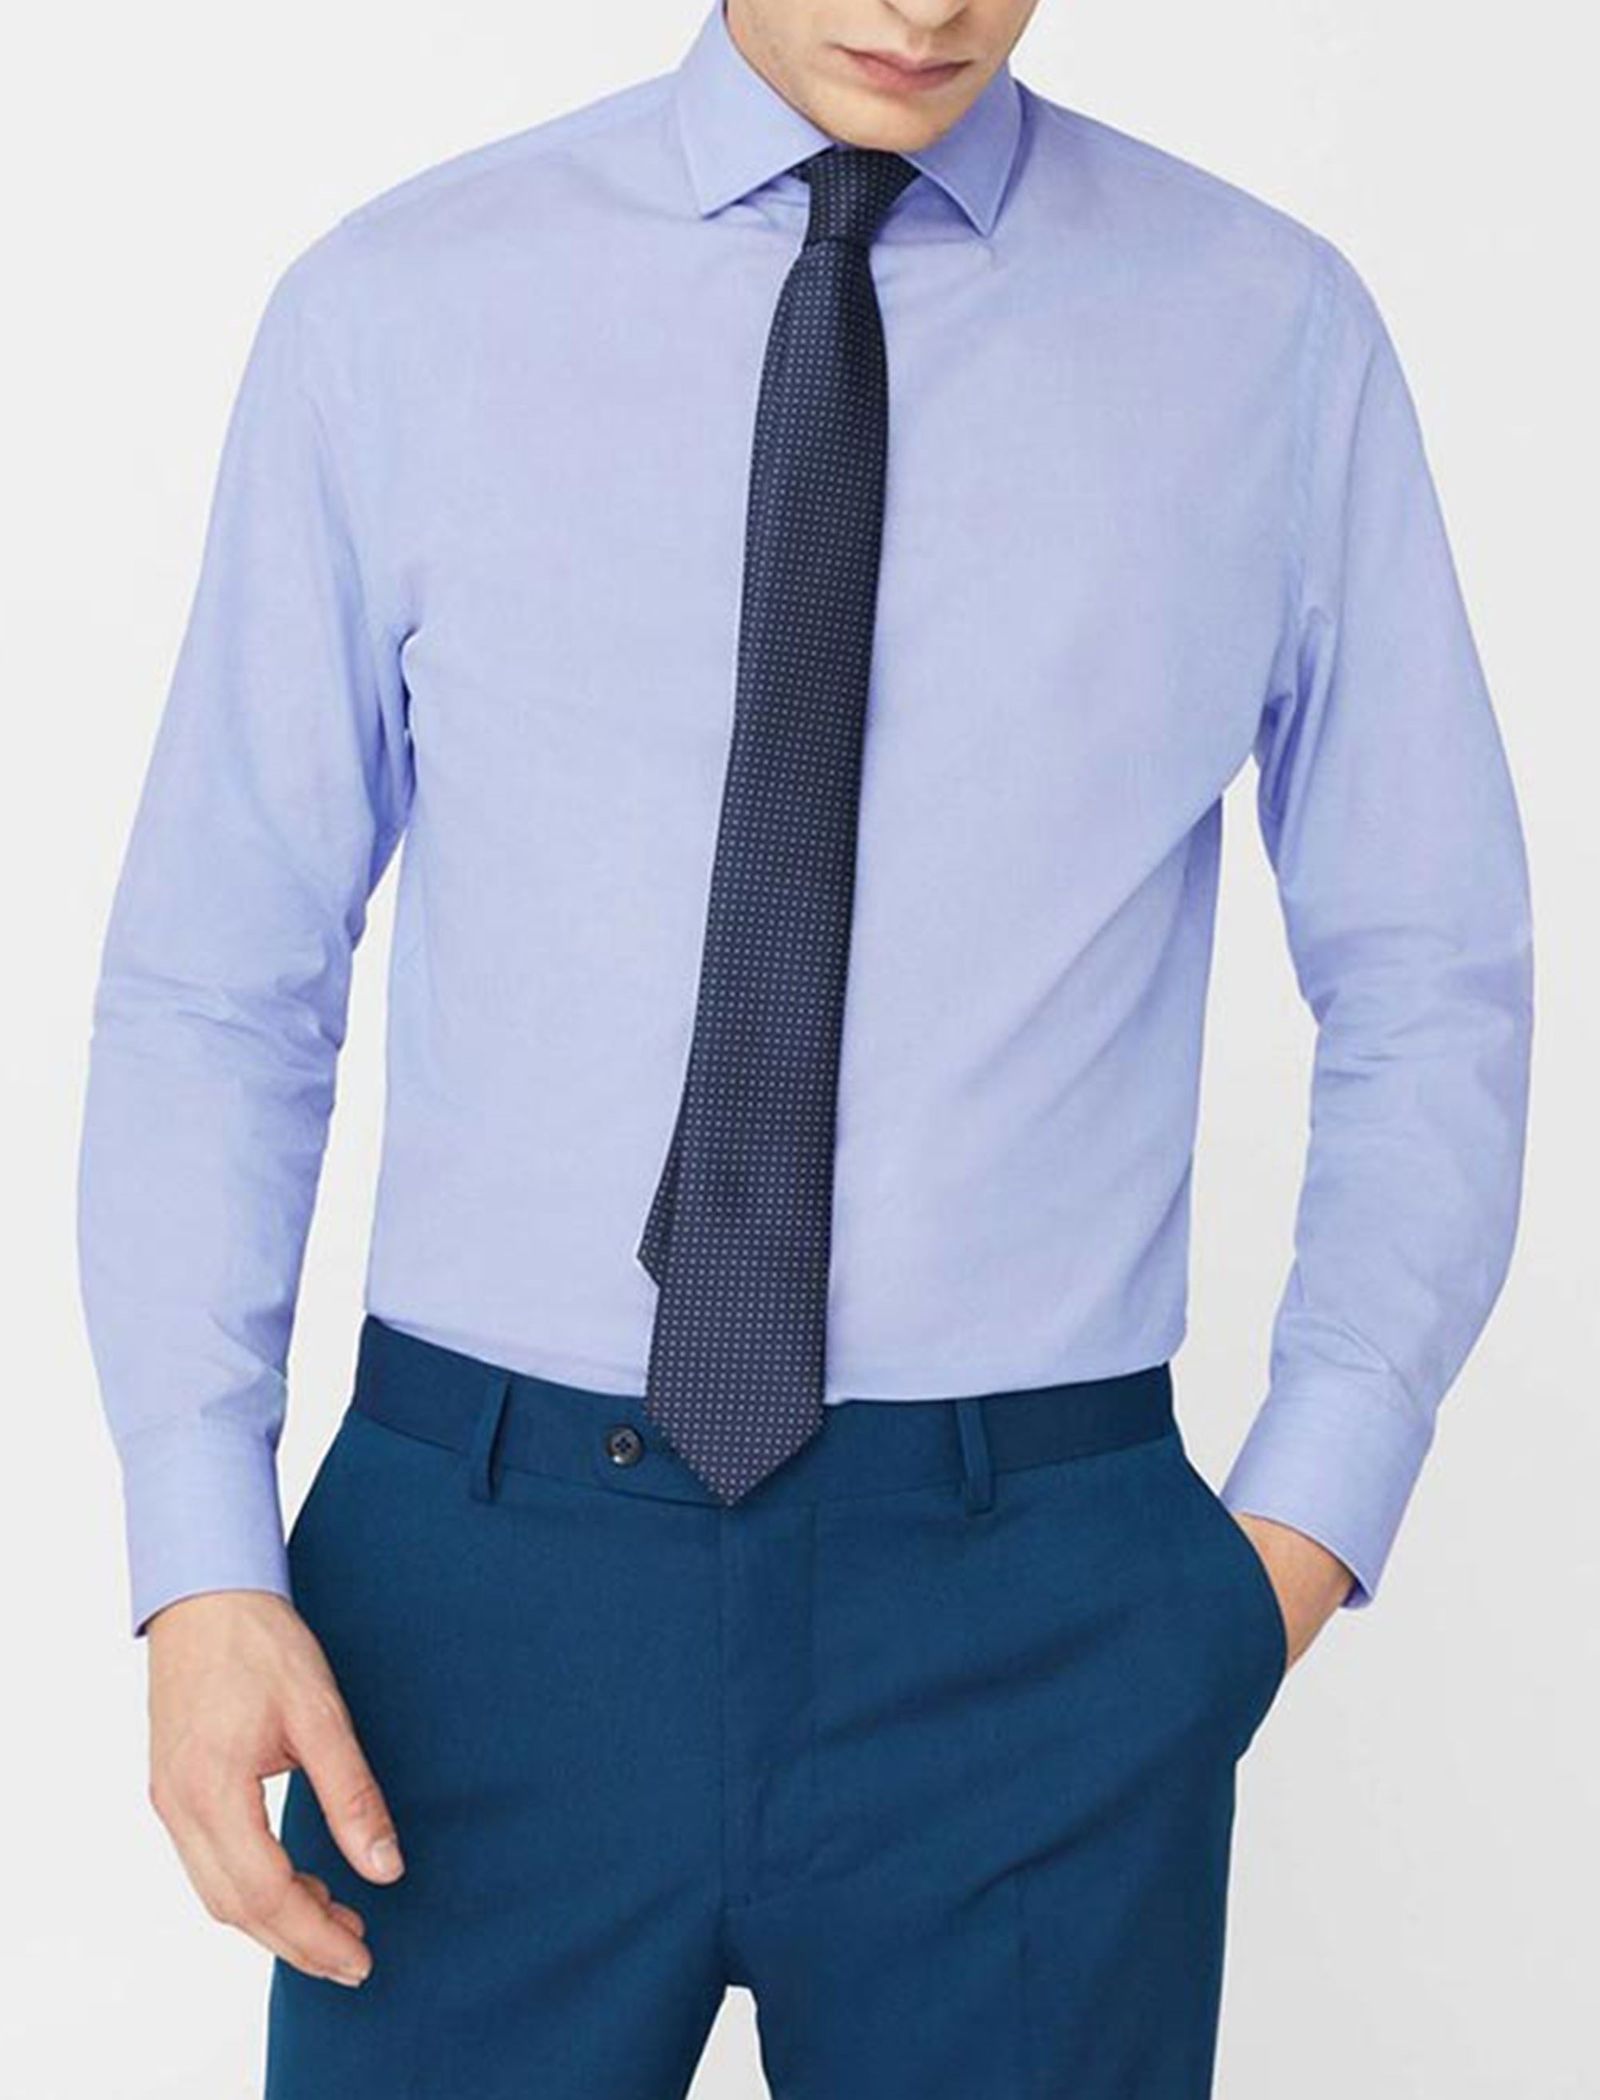 پیراهن رسمی مردانه - مانگو - آبي روشن - 2